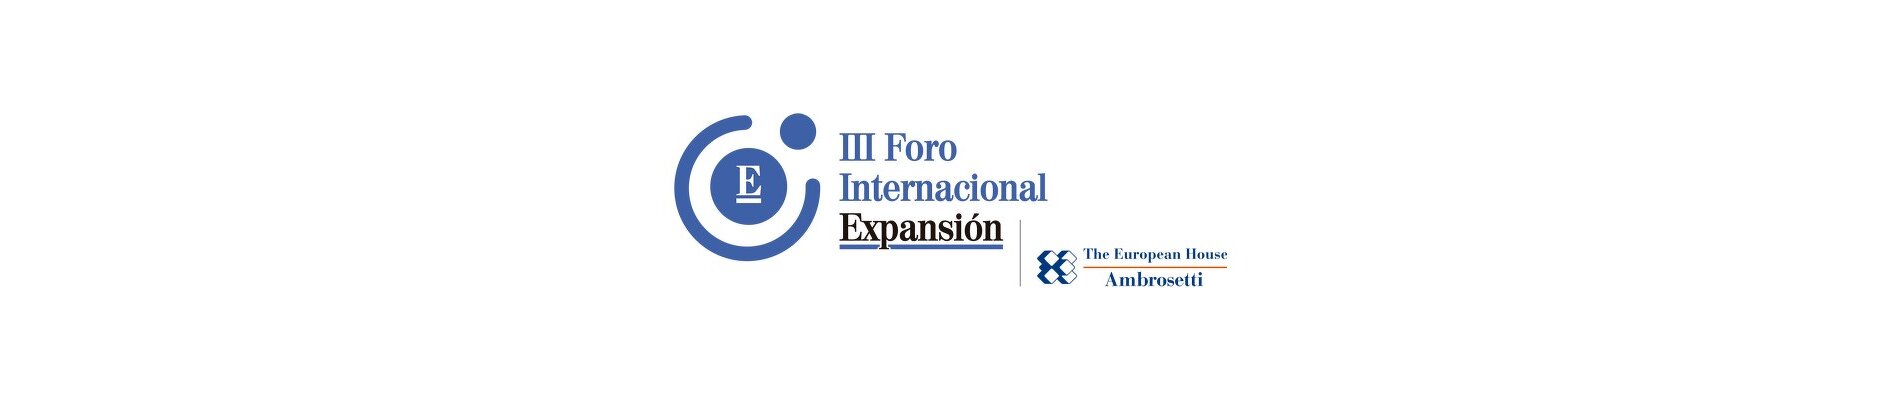 3rd International Forum Expansión